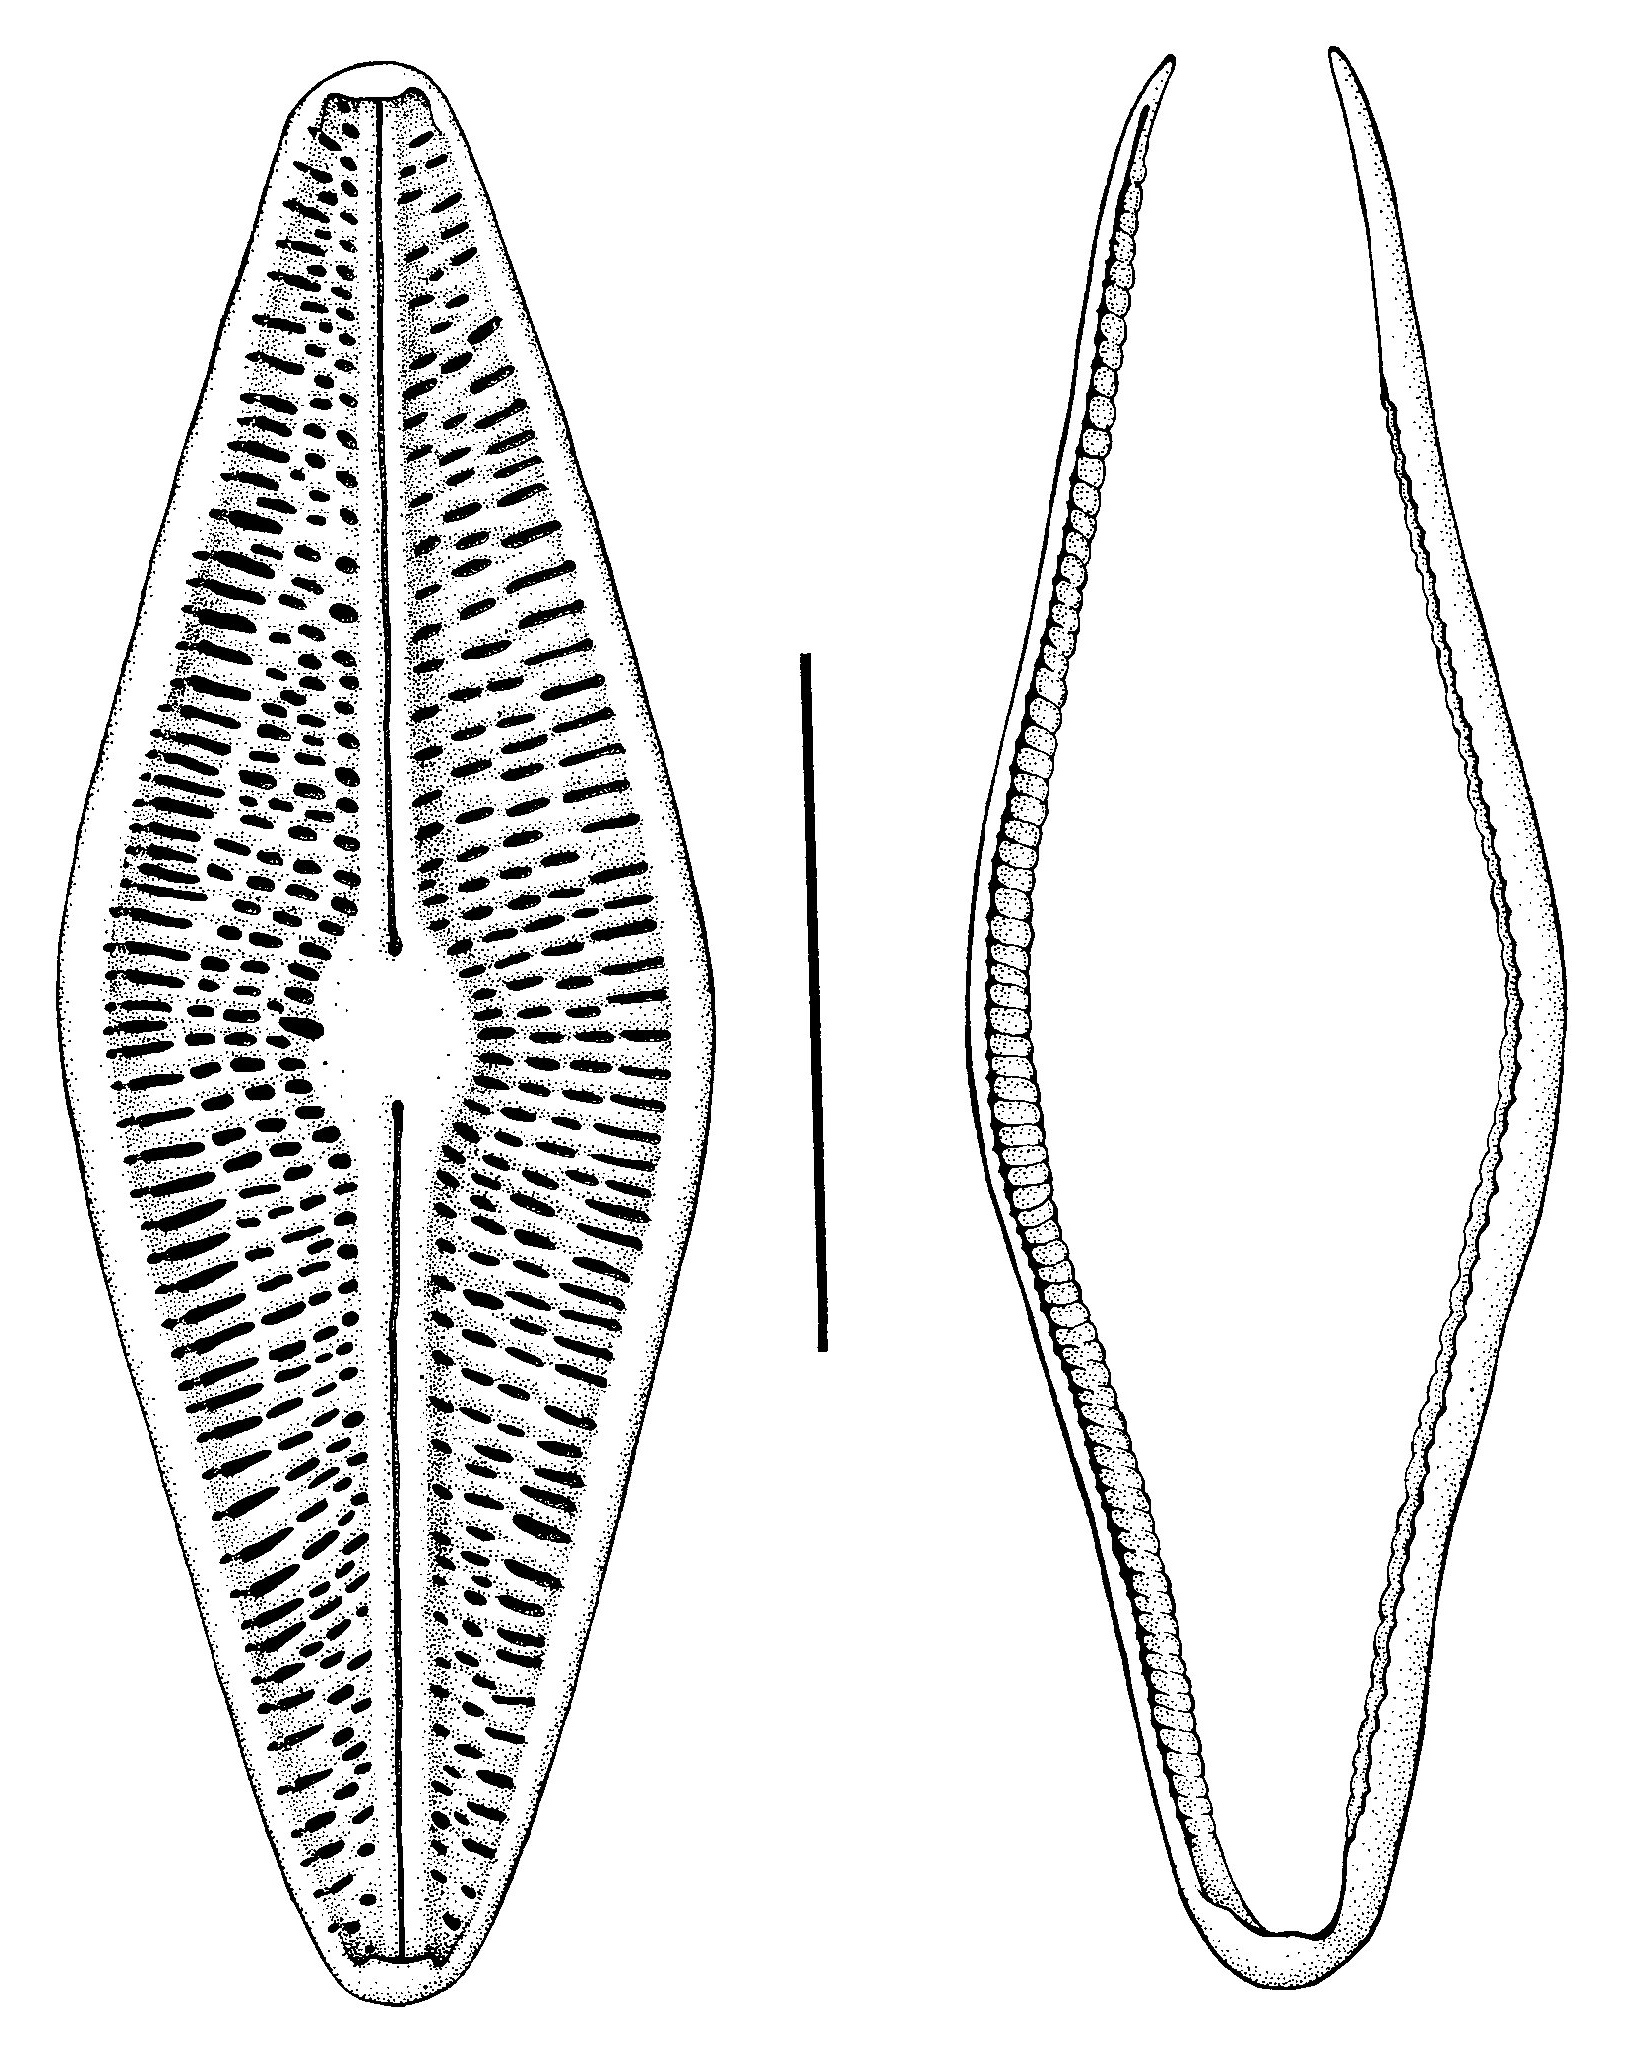 Brachysira arctoborealis orig illus 3